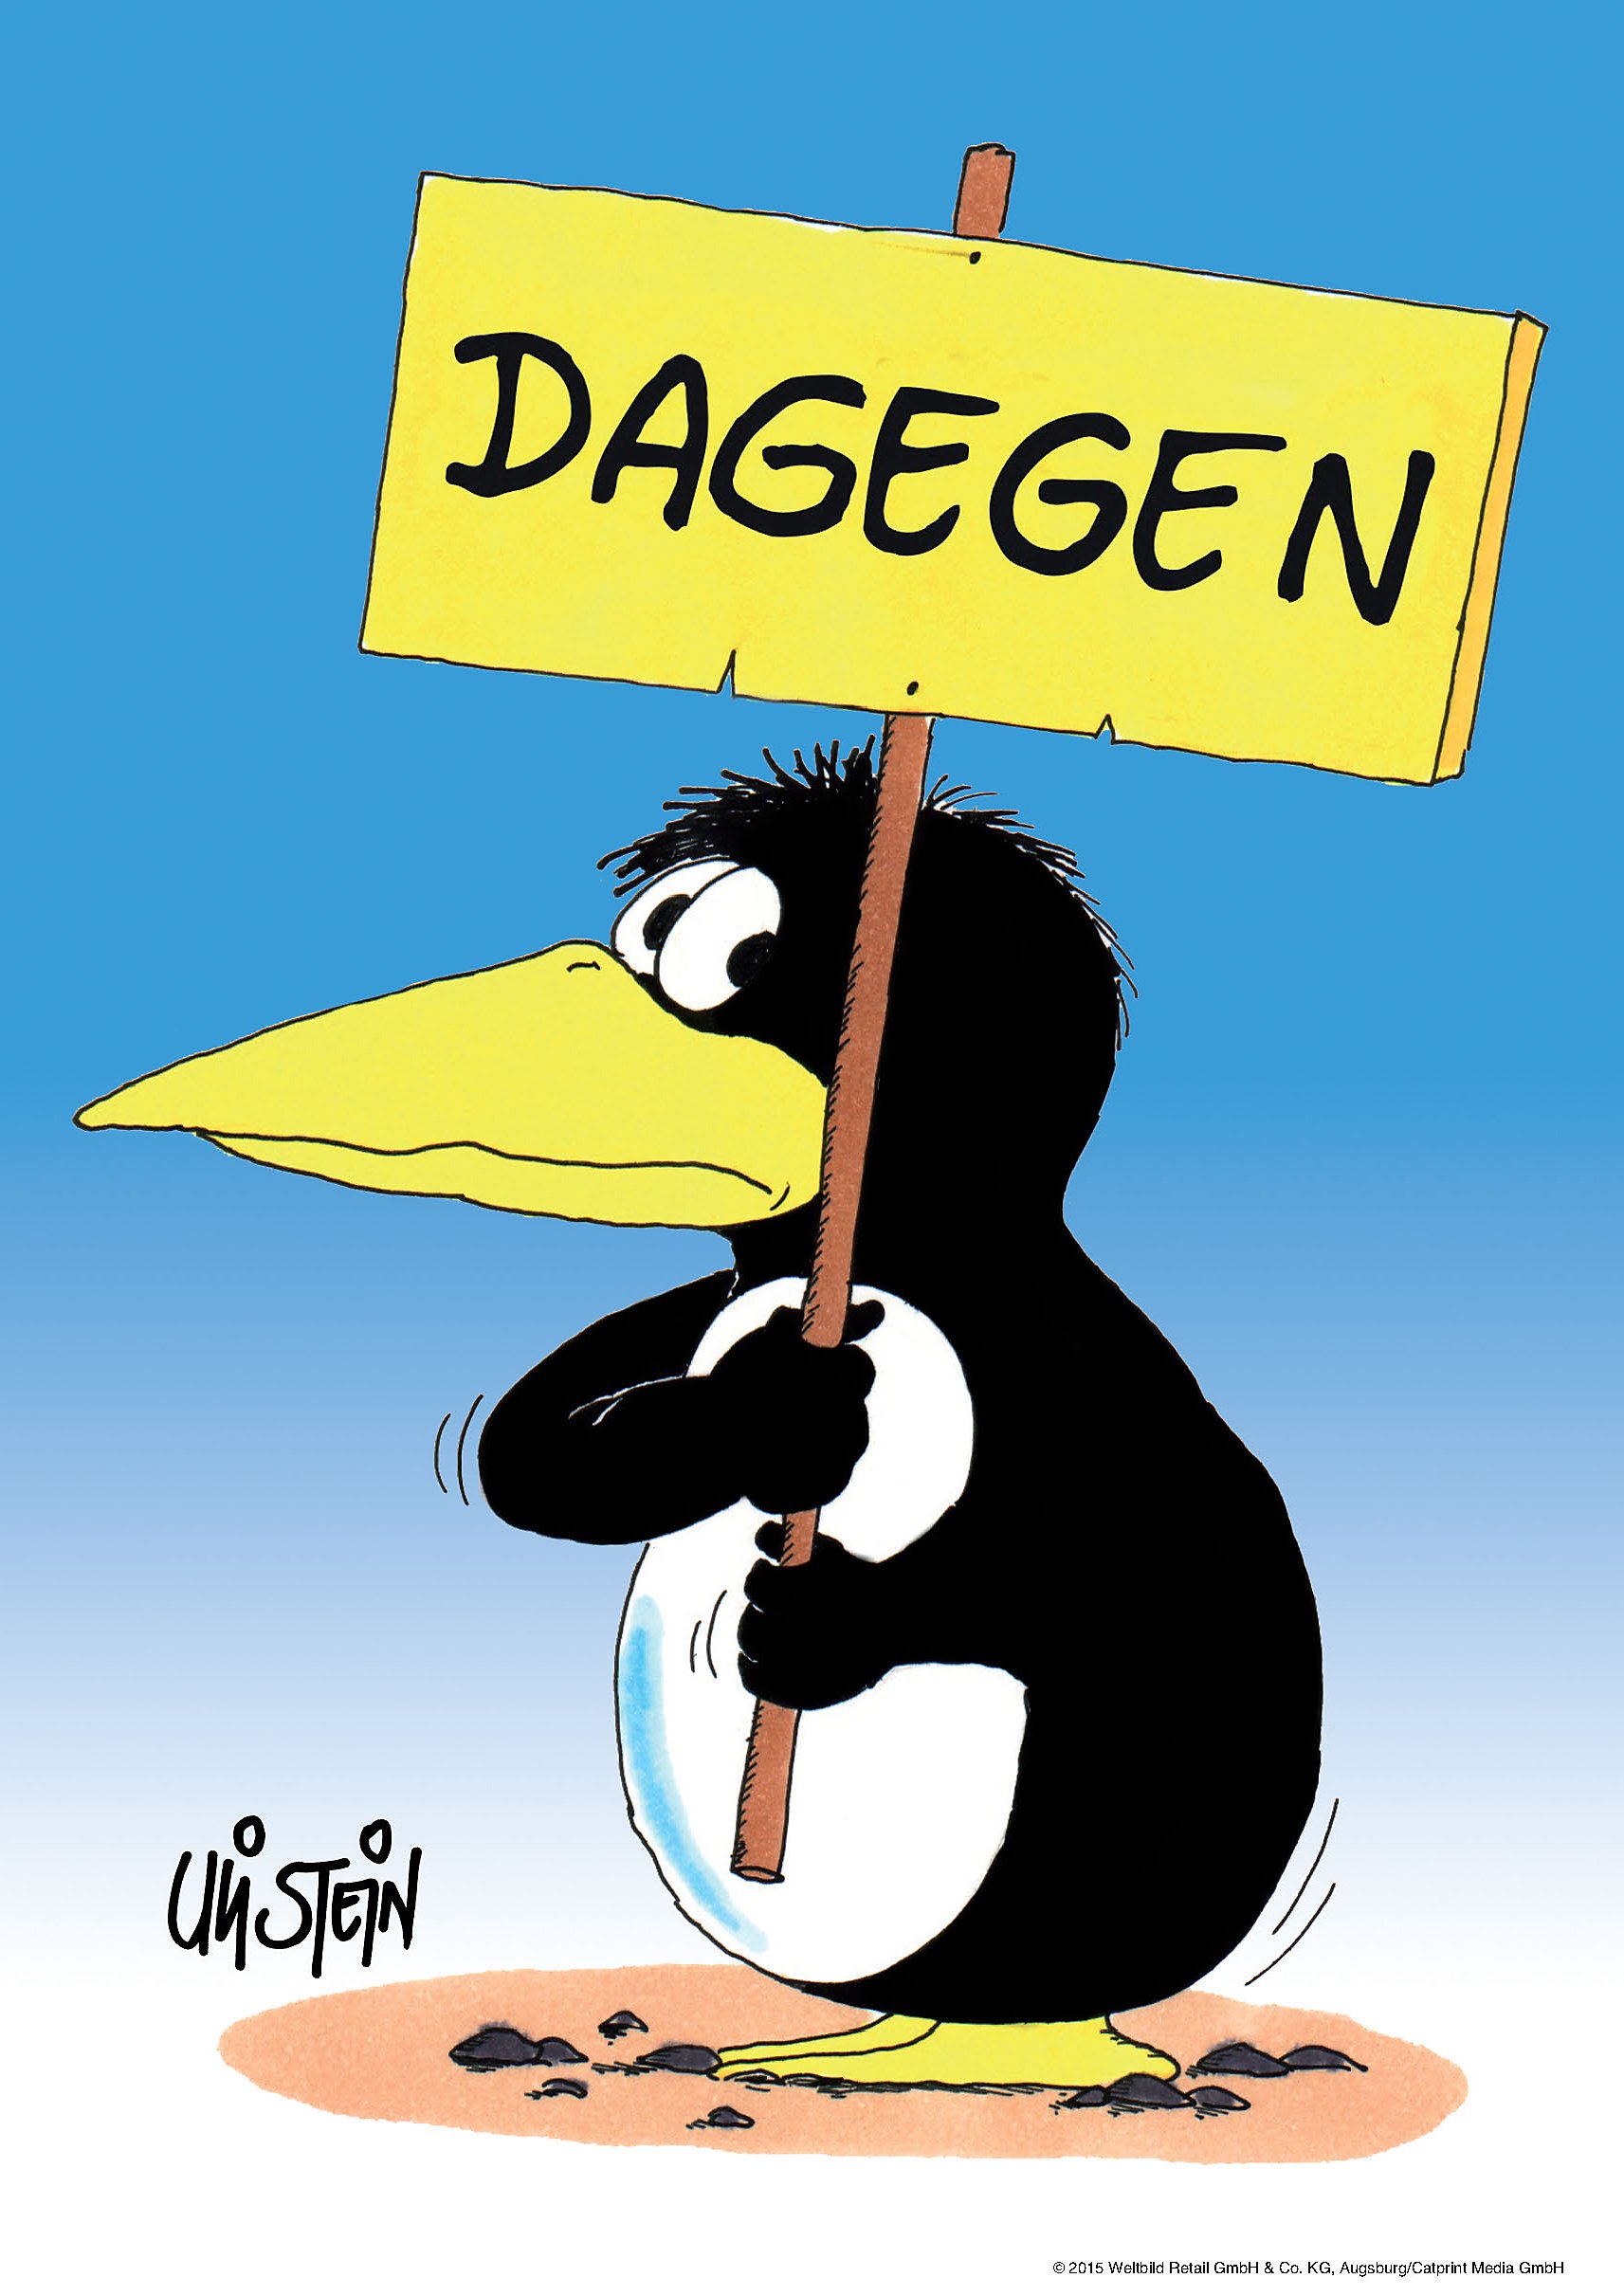 Pinguin Dagegen